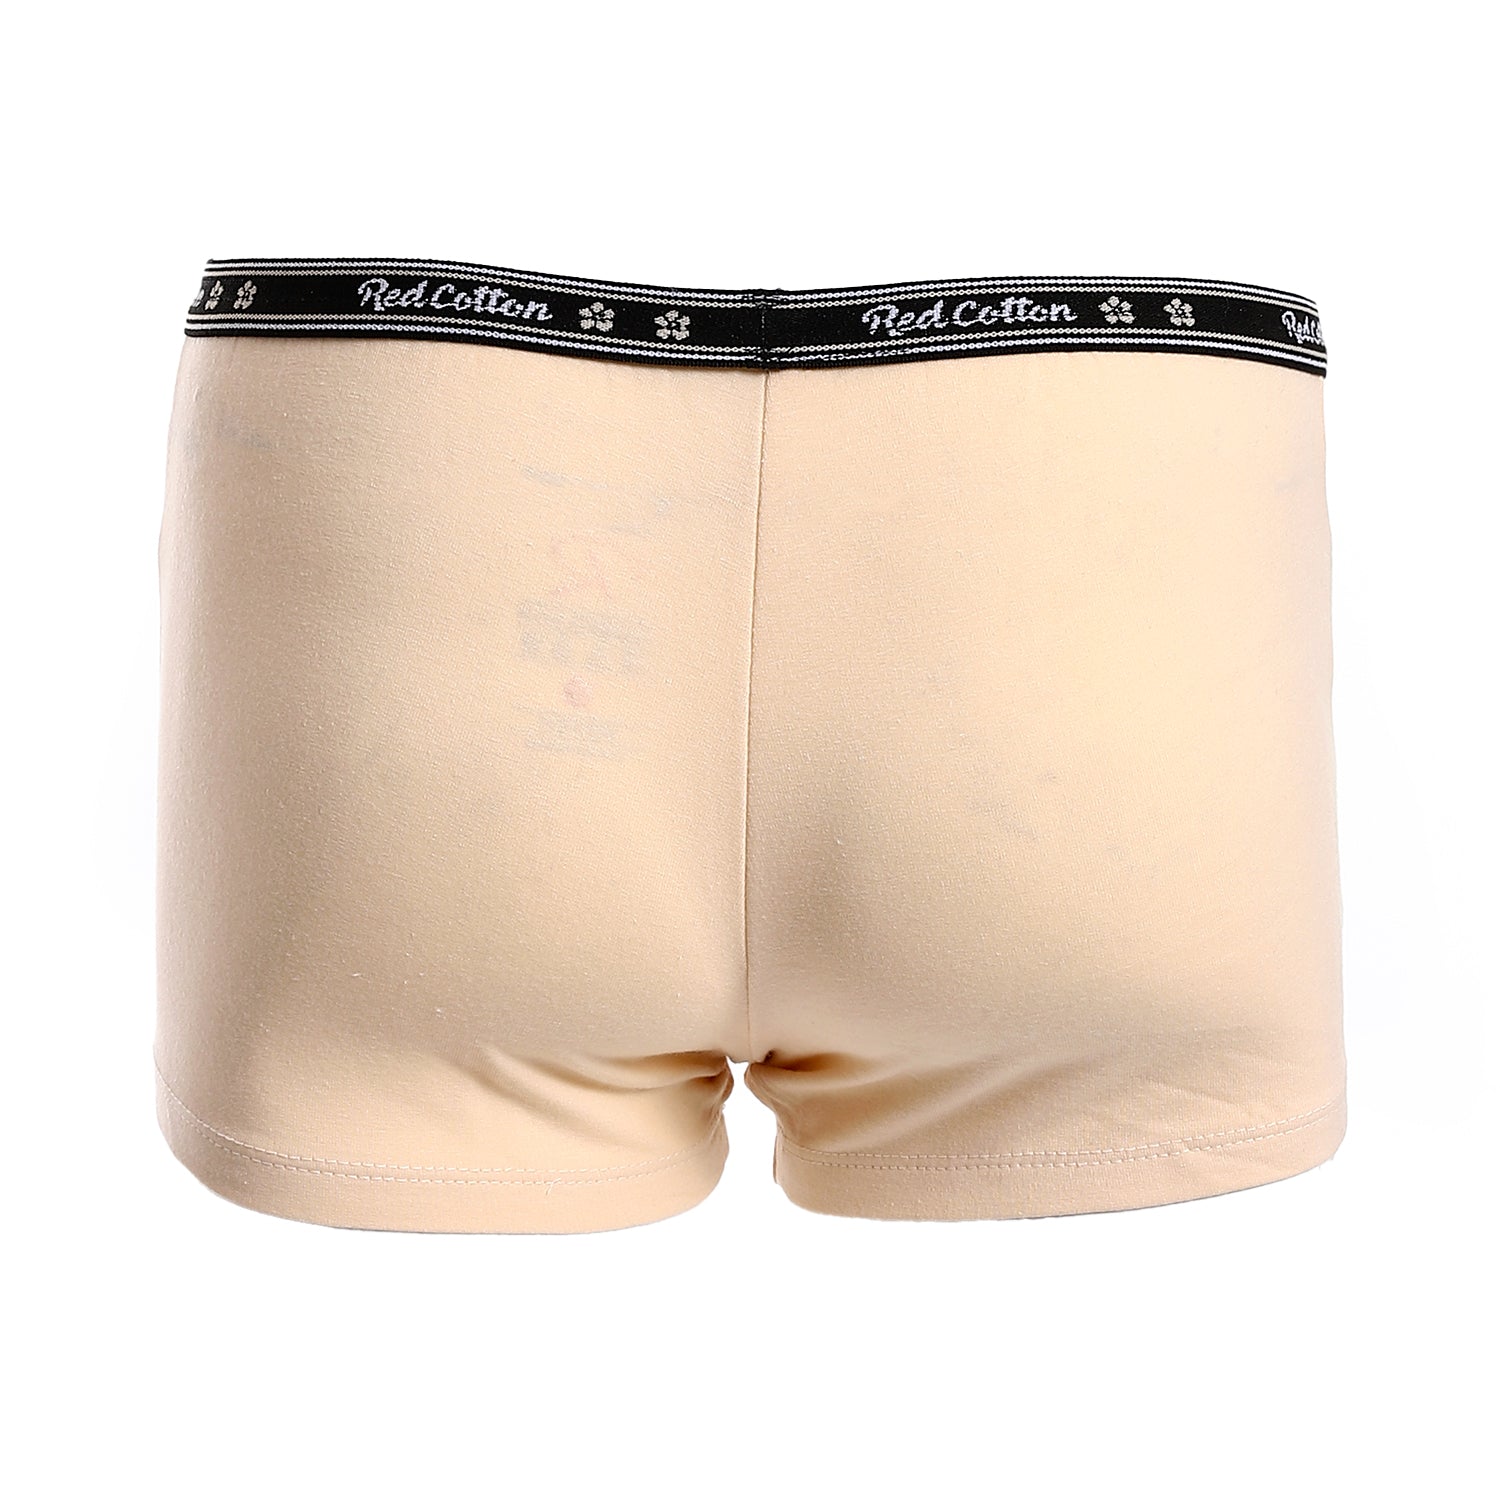 Comfortable and Stylish Women's Hot Shorts Underwear-Beige